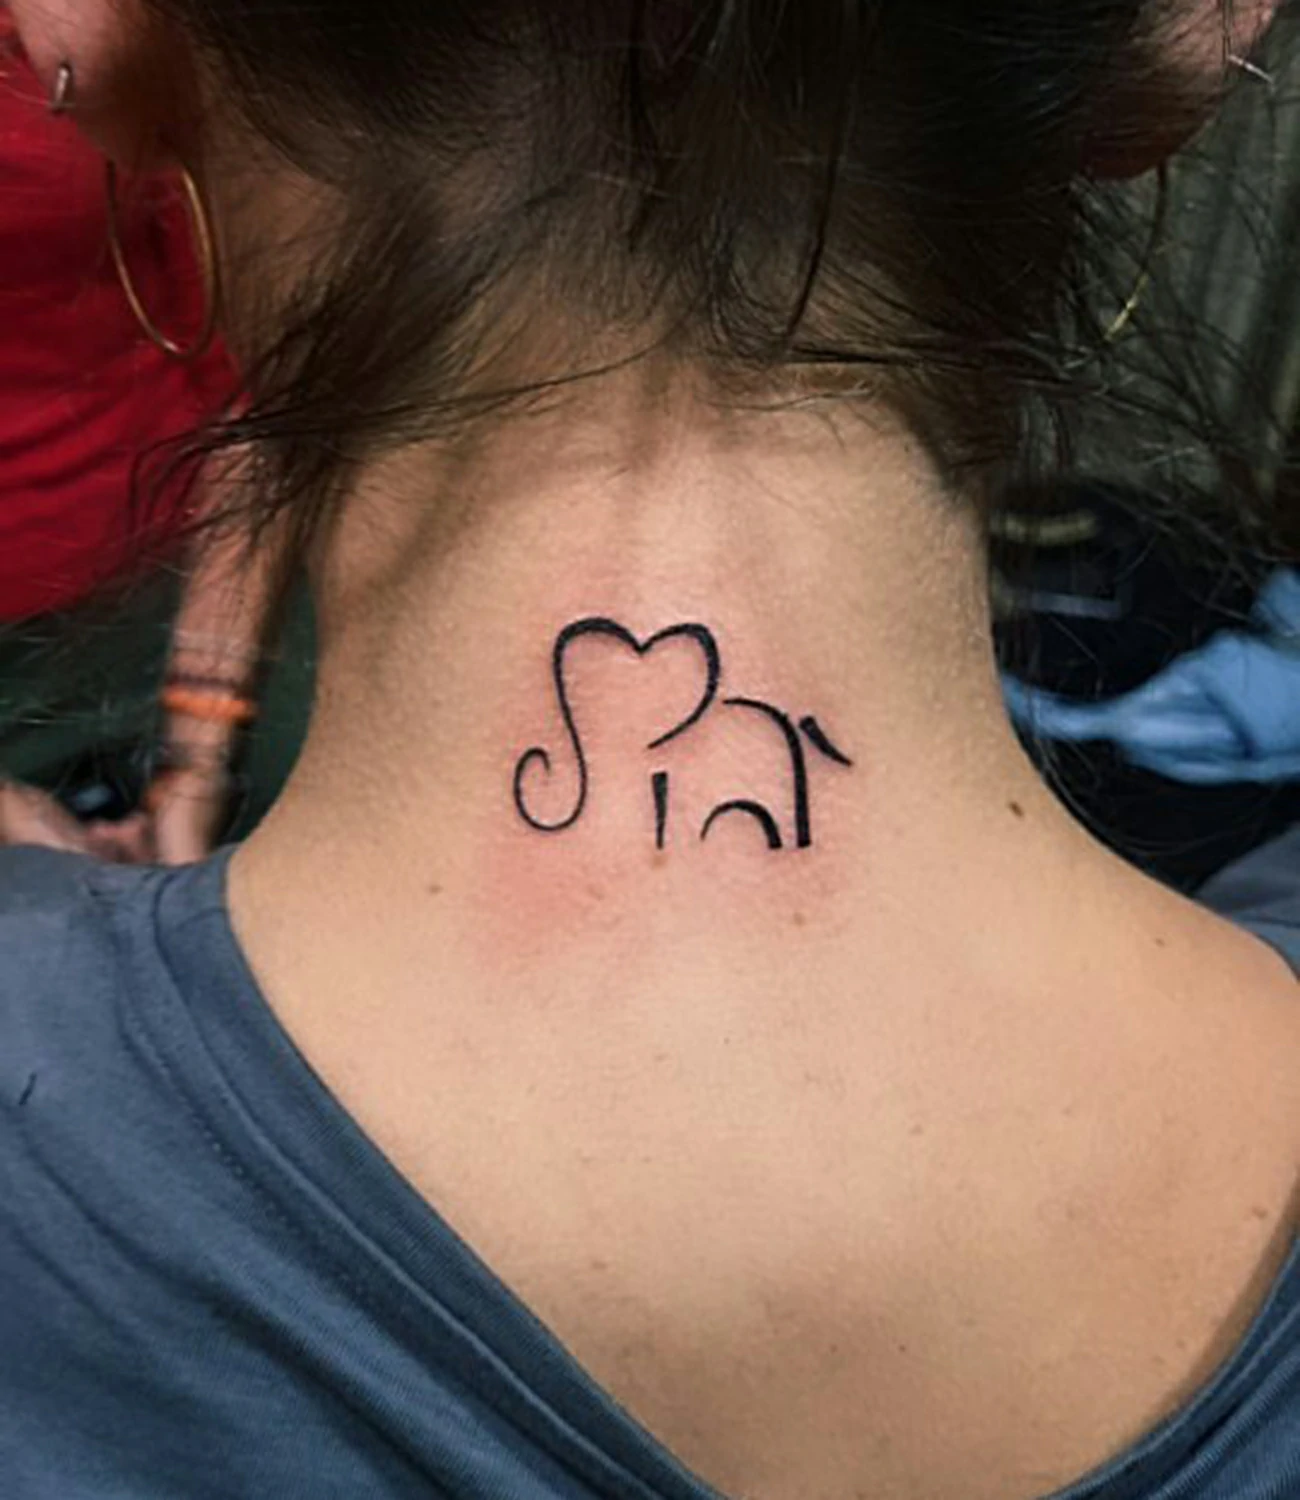 Elephant Tattoo on Neck